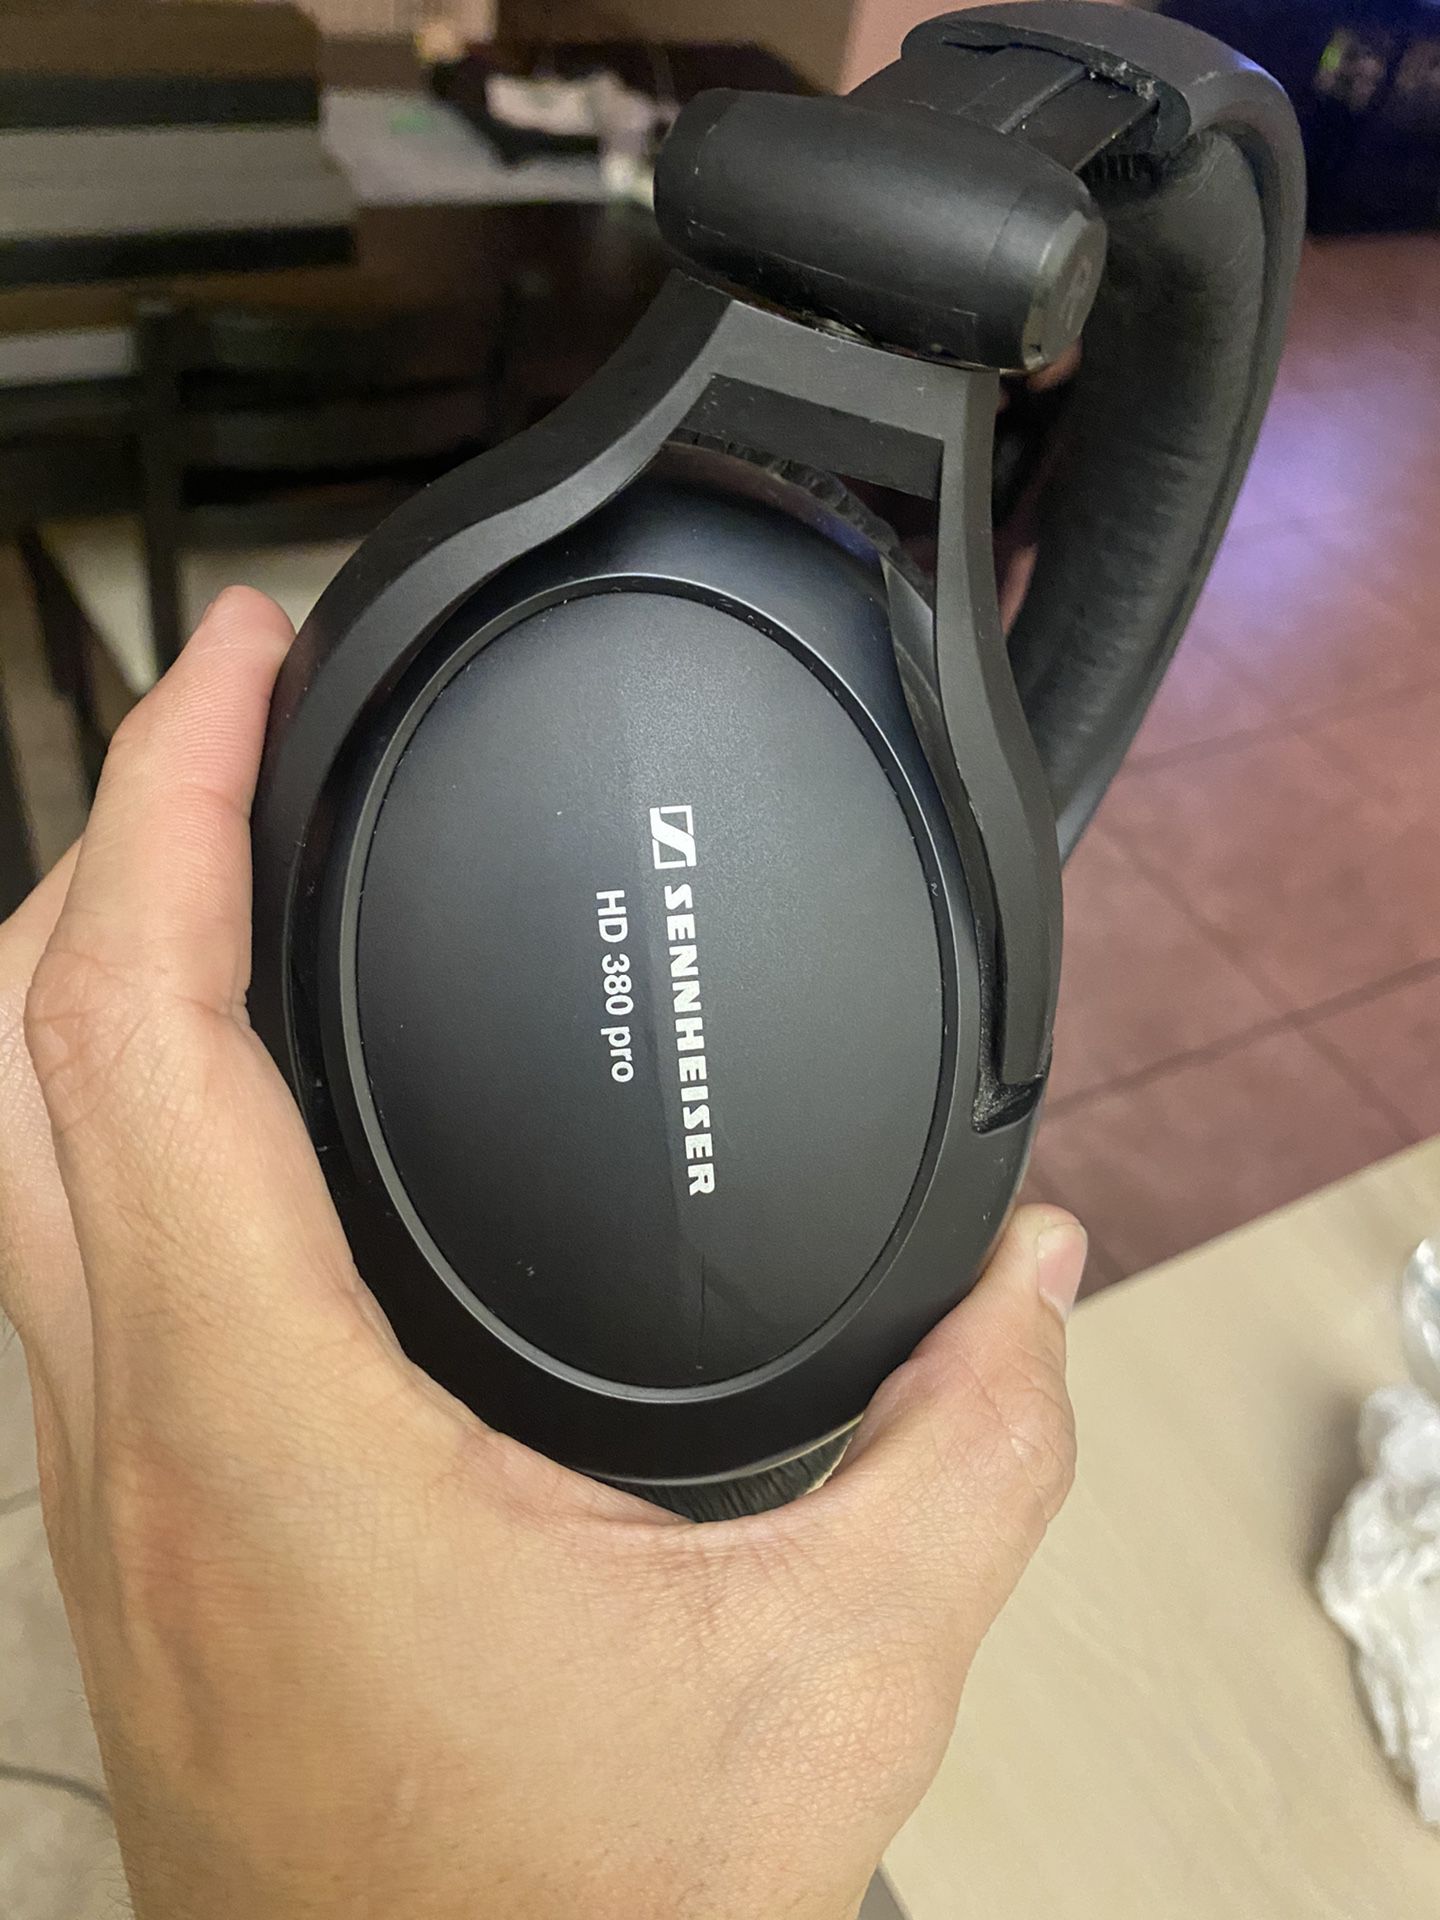 Sennheiser HD 380 Pro headphones